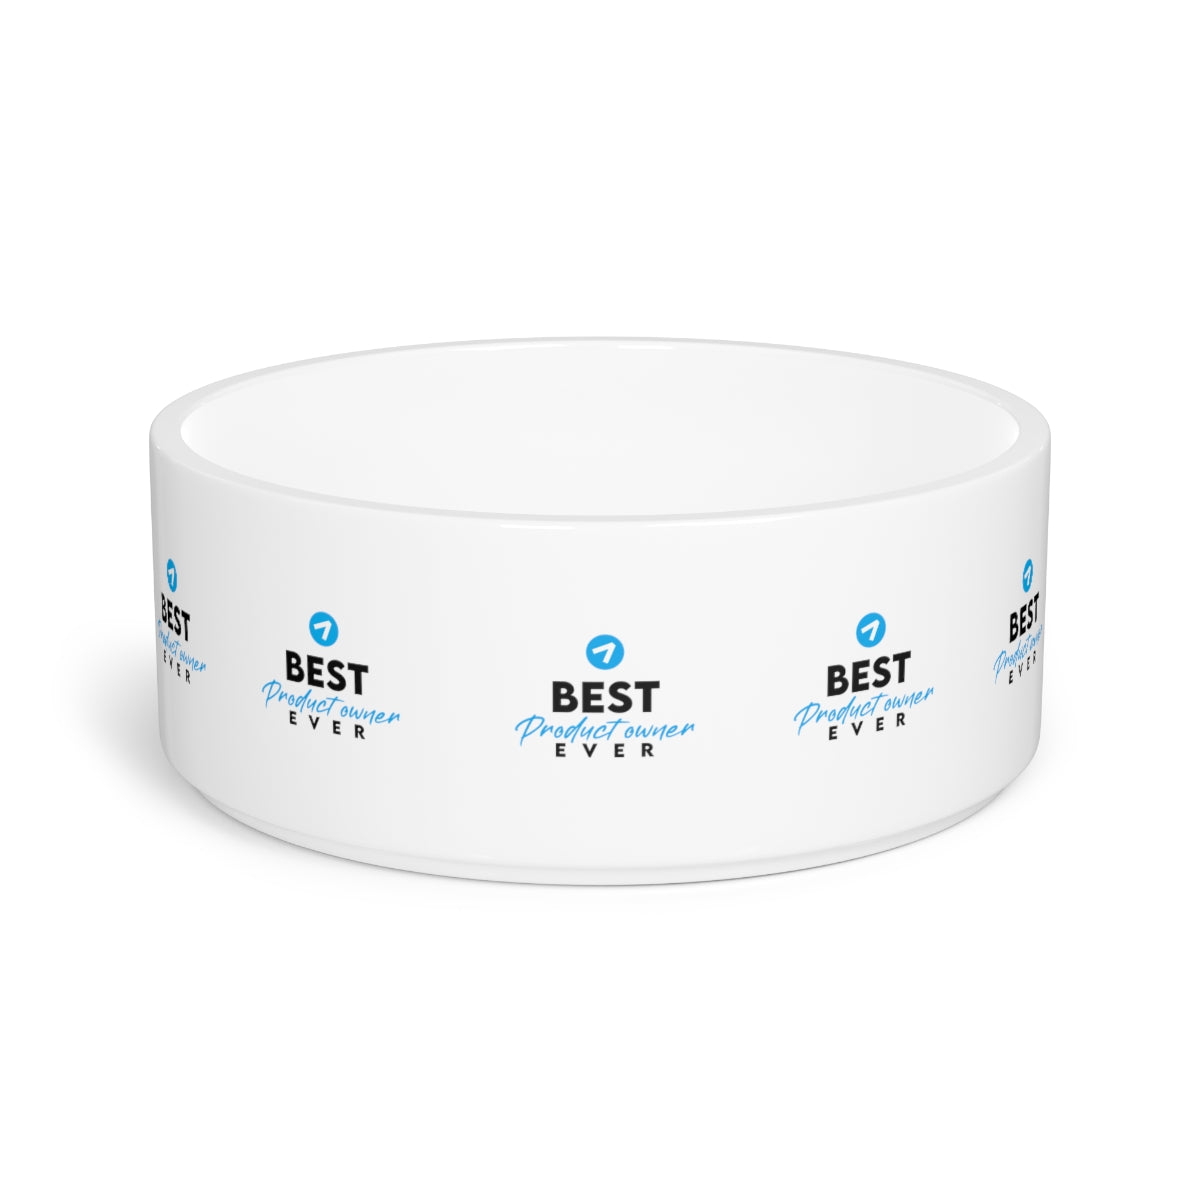 Best Product Owner ever - Light Blue - Pet Bowl